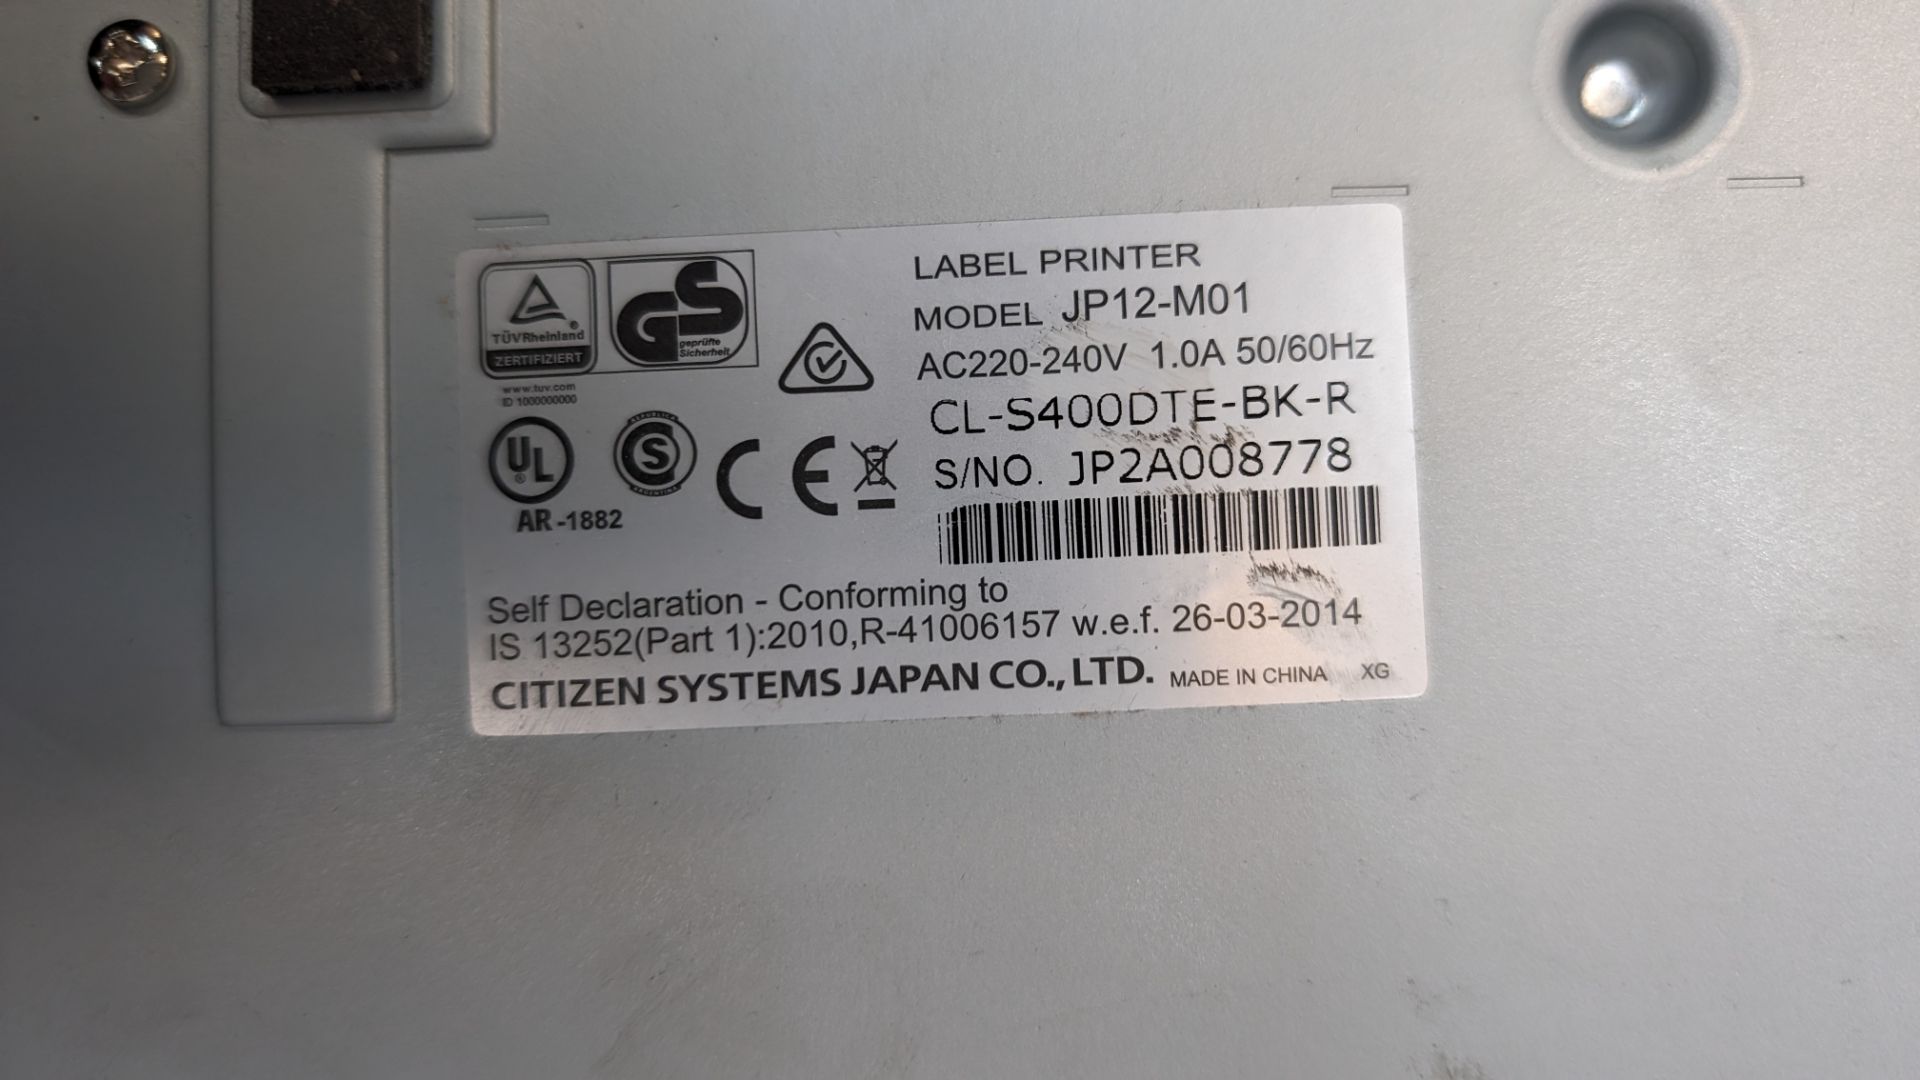 Citizen model CL-S400DT label printer - Image 5 of 7